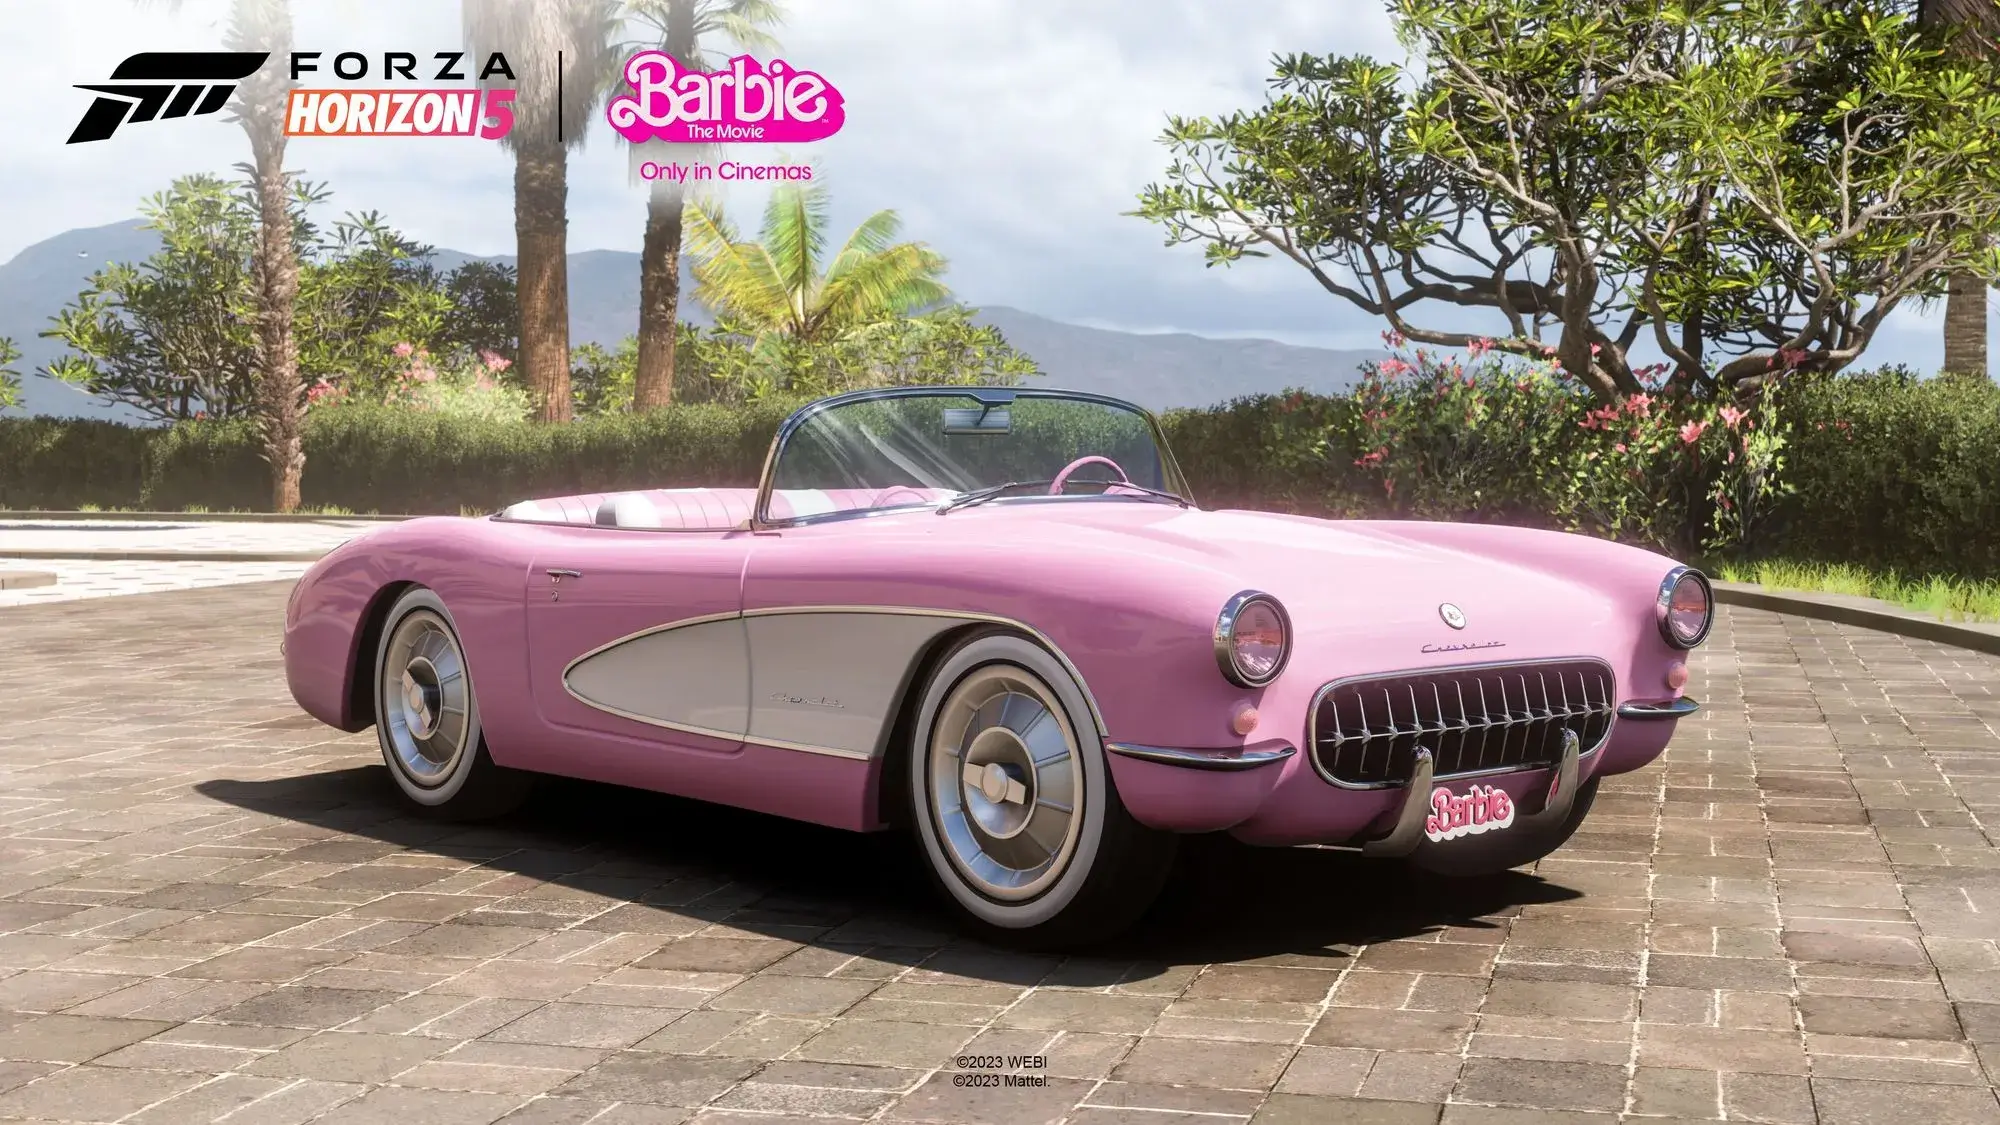 Corvette Barbie Forza Horizon 5